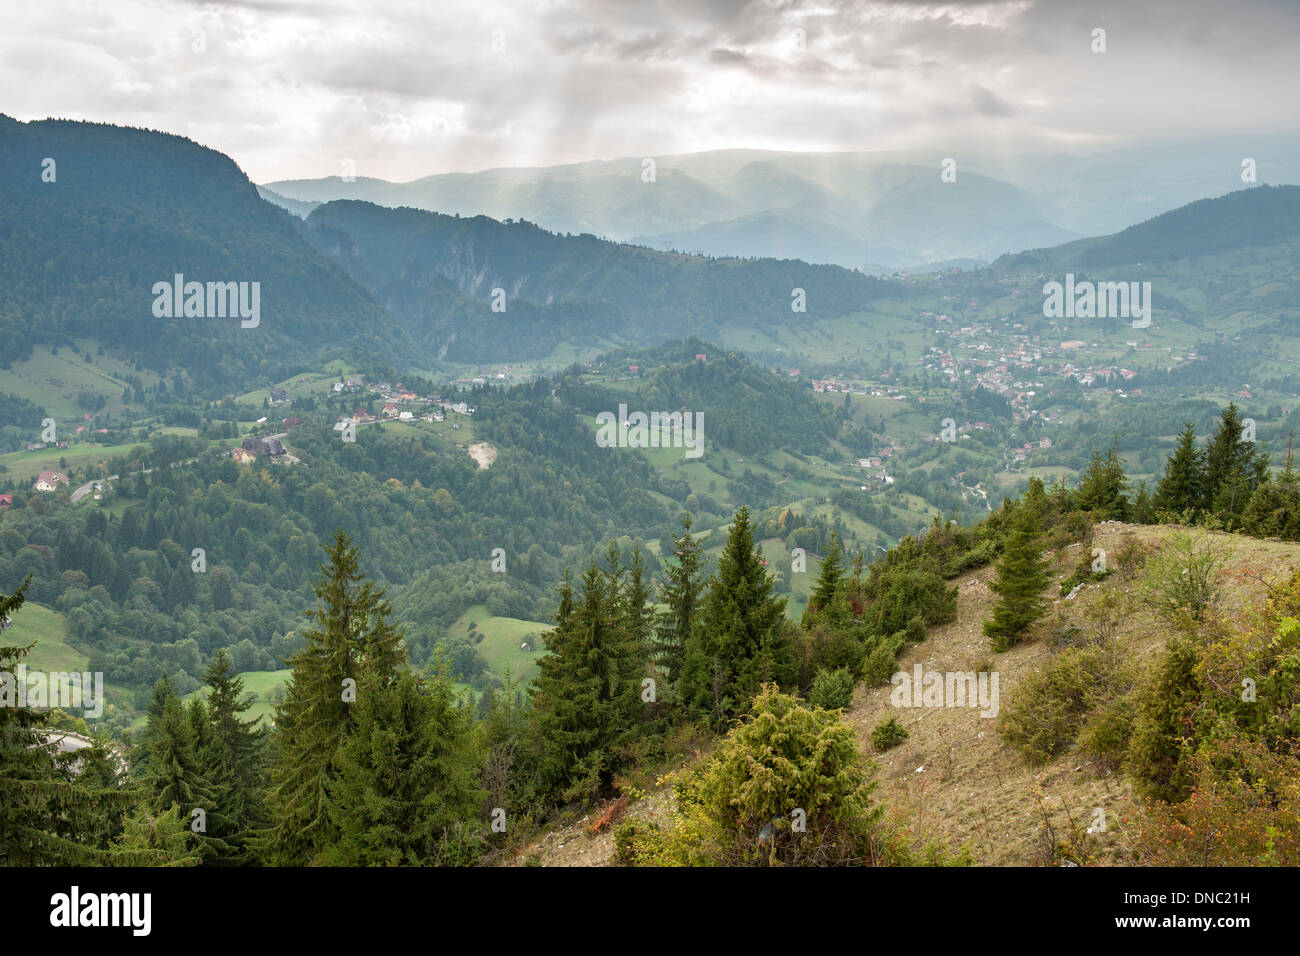 Carpathian mountains and landscape near Bucegi Natural Park in the Transylvania region of central Romania. Stock Photo